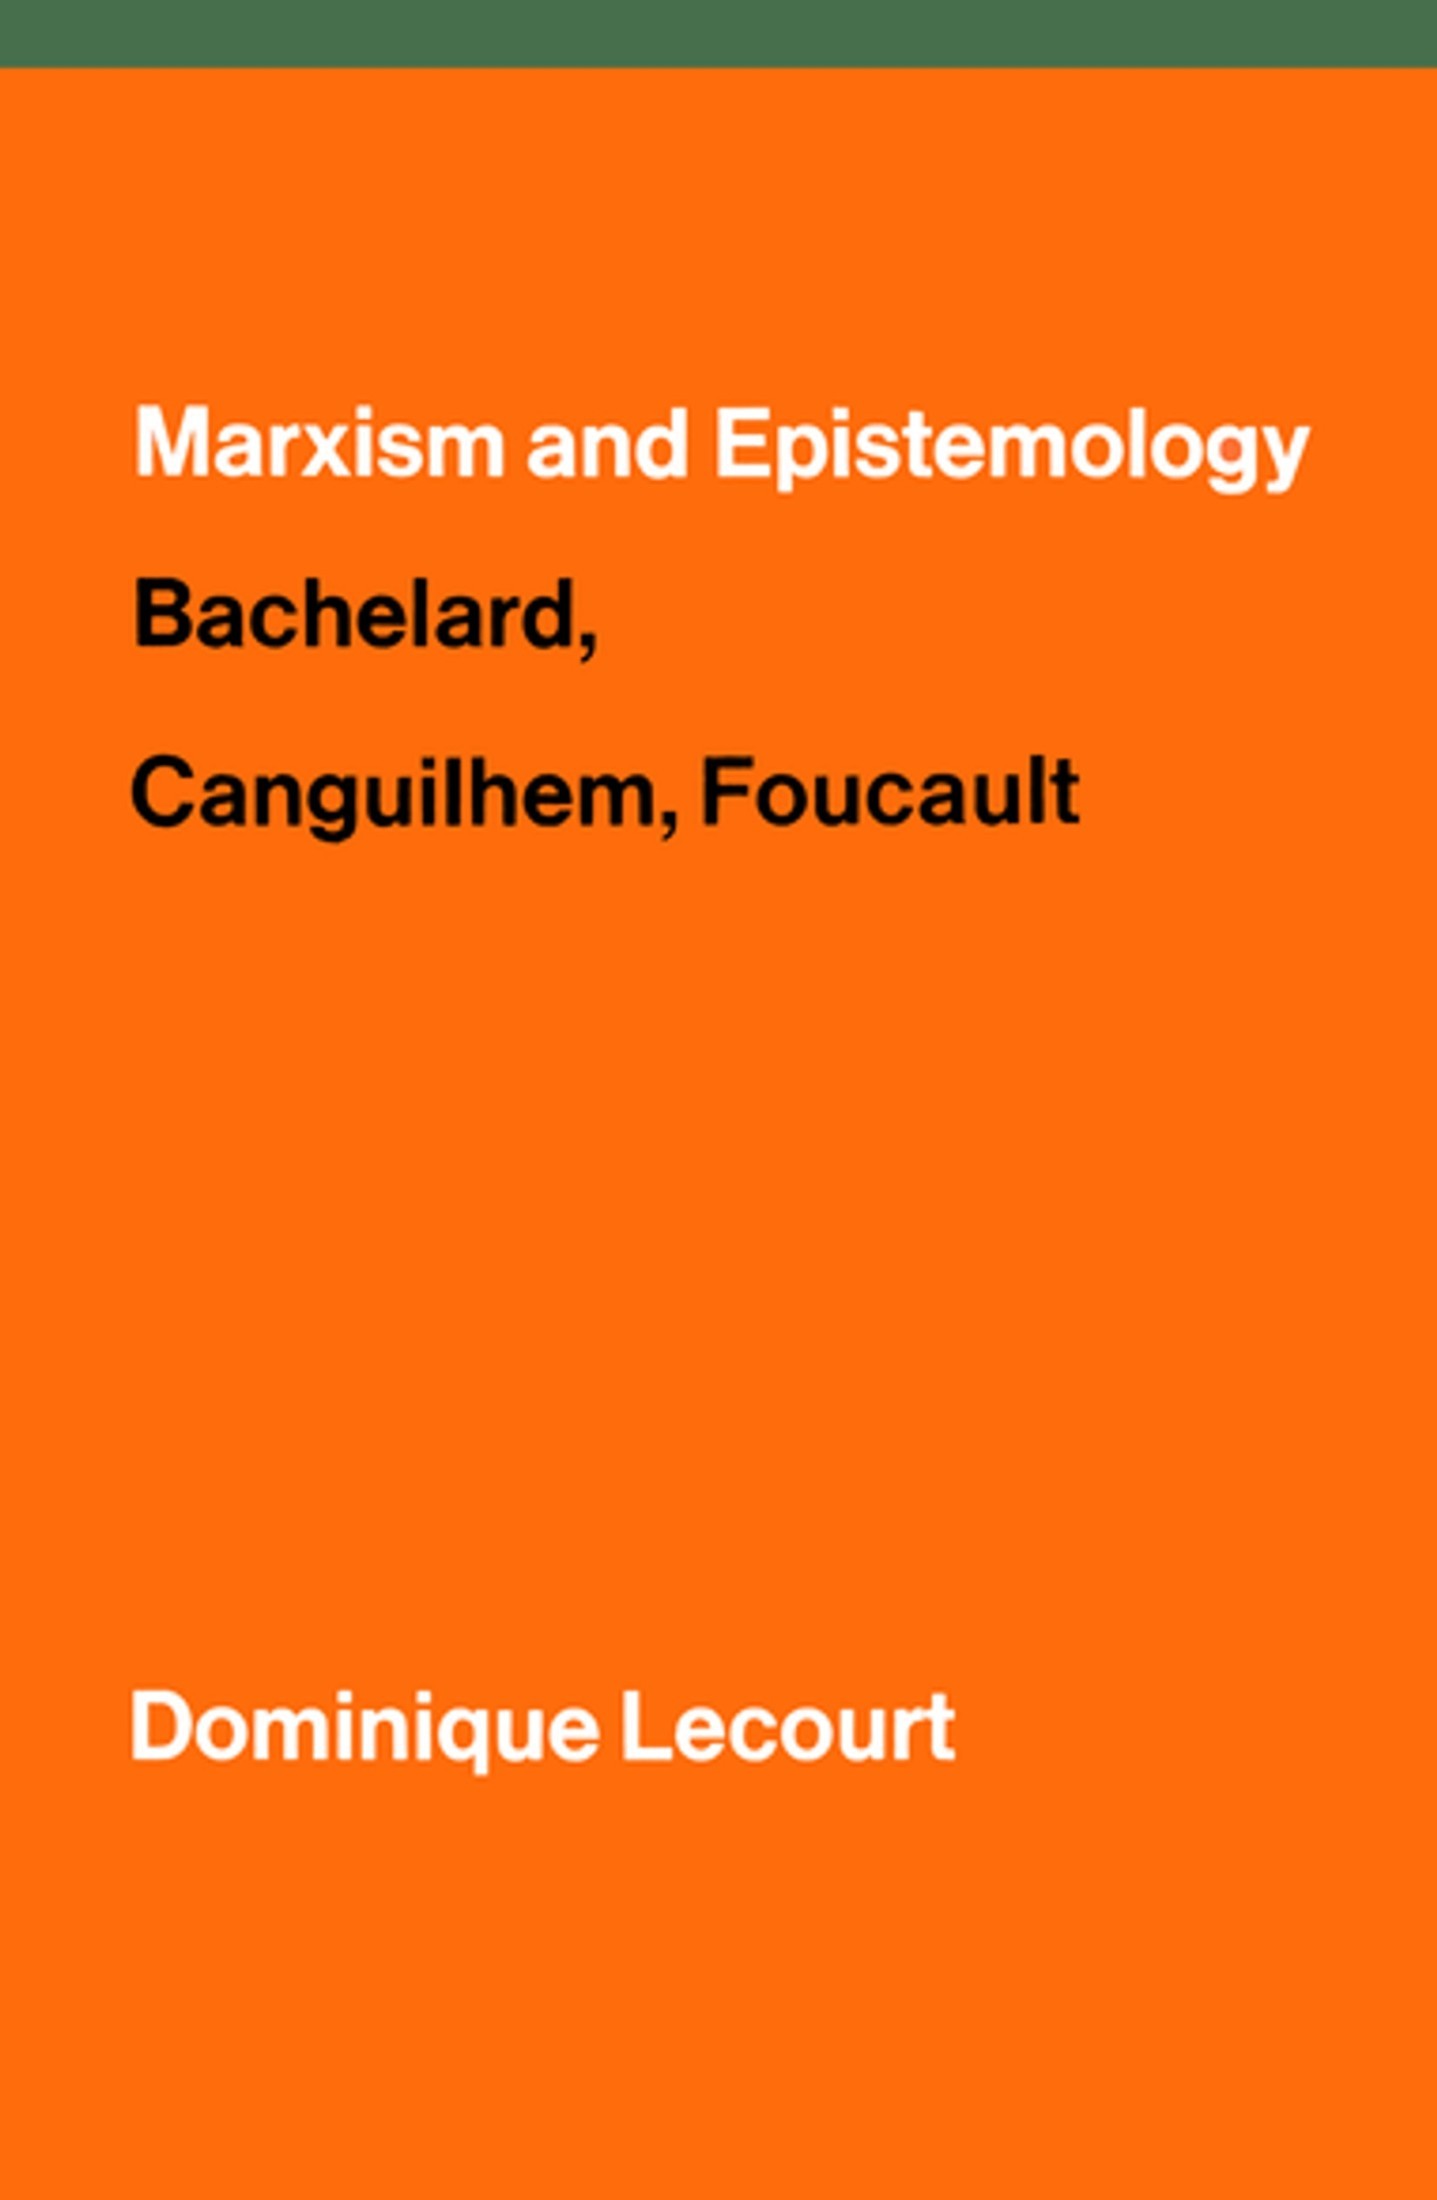 Marxism and Epistemology: Bachelard, Canguilhem, Foucault